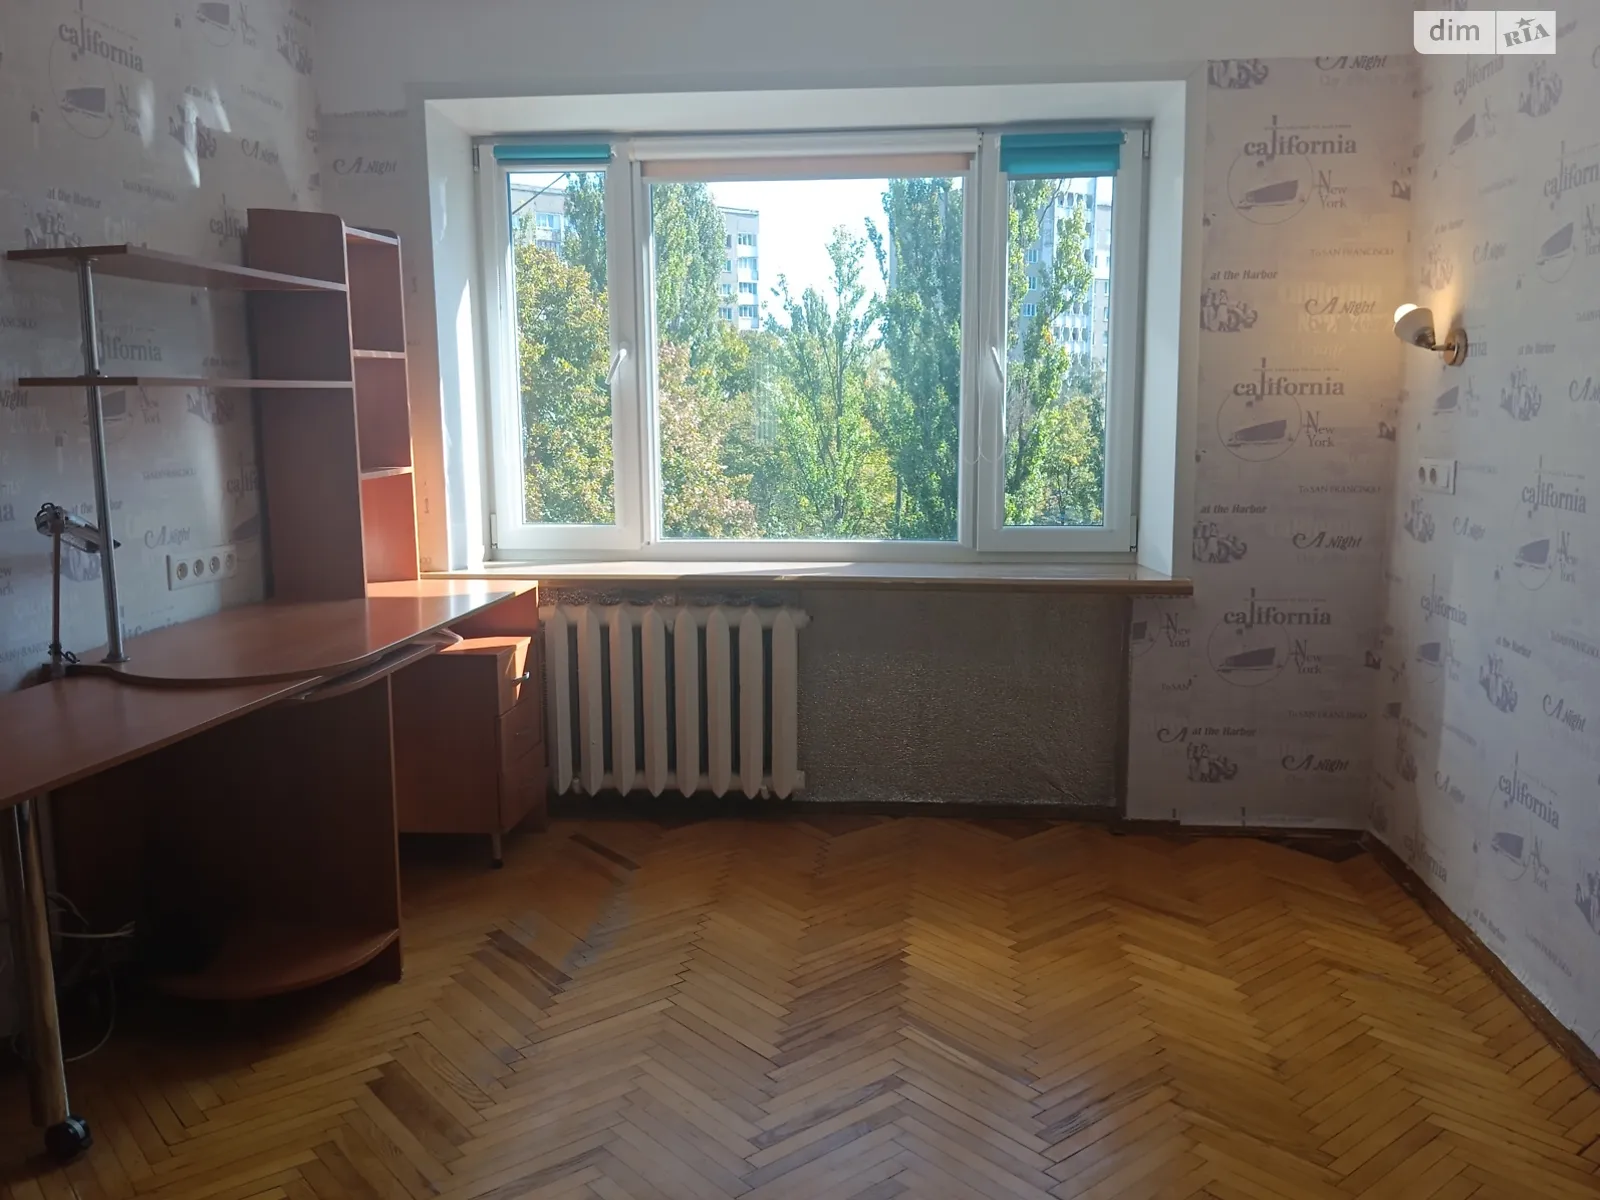 Продается комната 15 кв. м в Киеве, цена: 13500 $ - фото 1